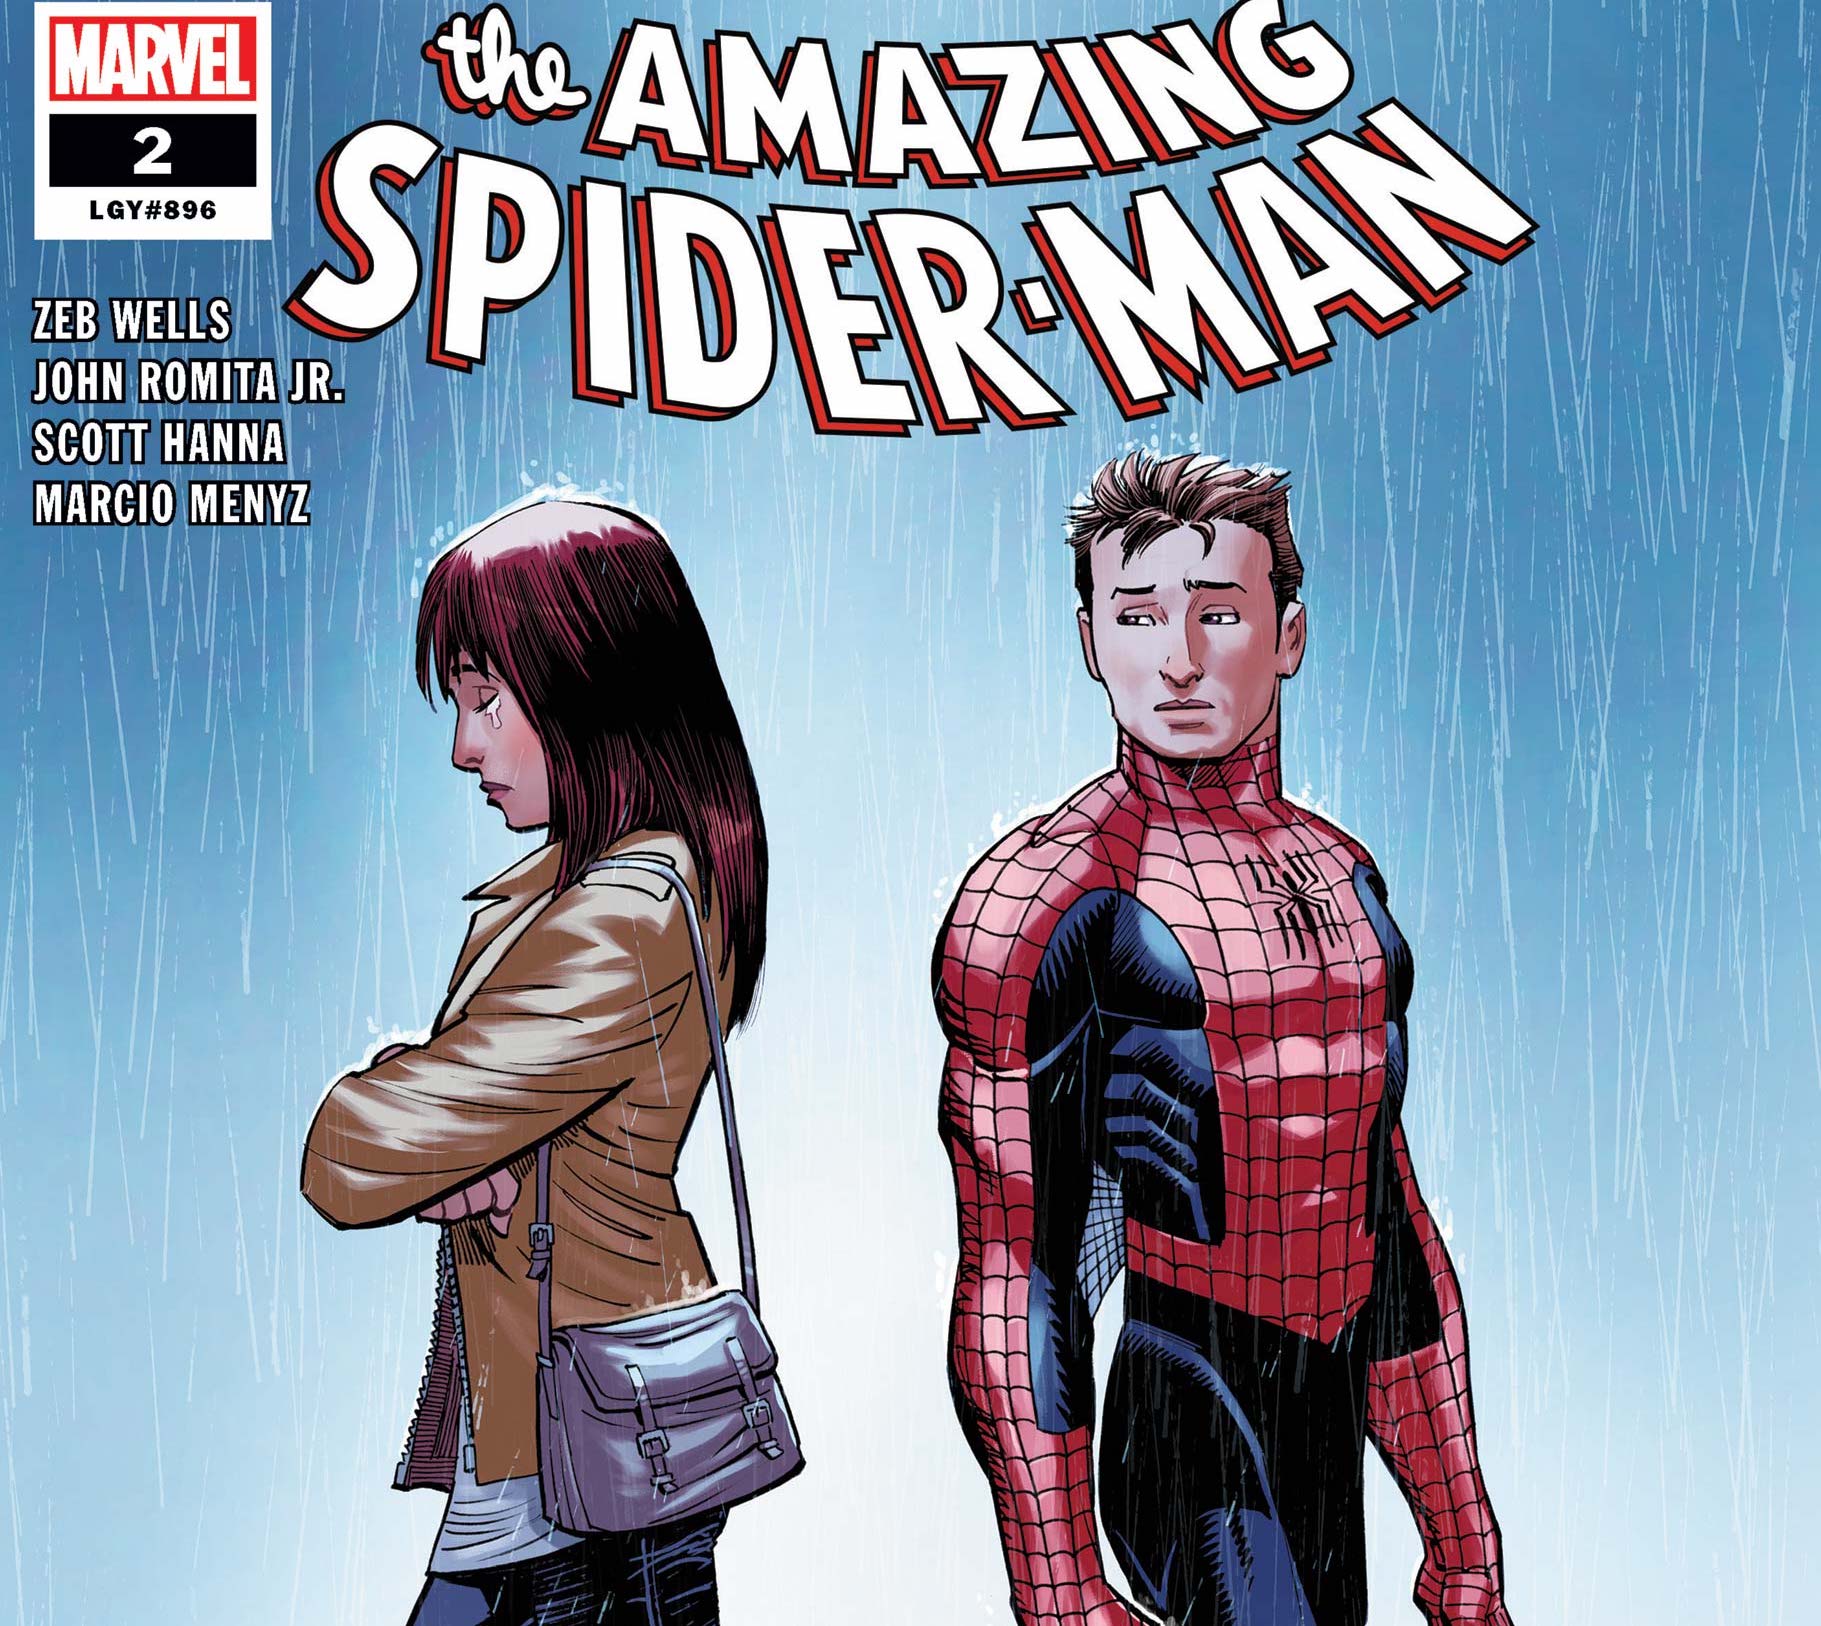 'Amazing Spider-Man' #2 confirms Peter Parker's got a bad attitude